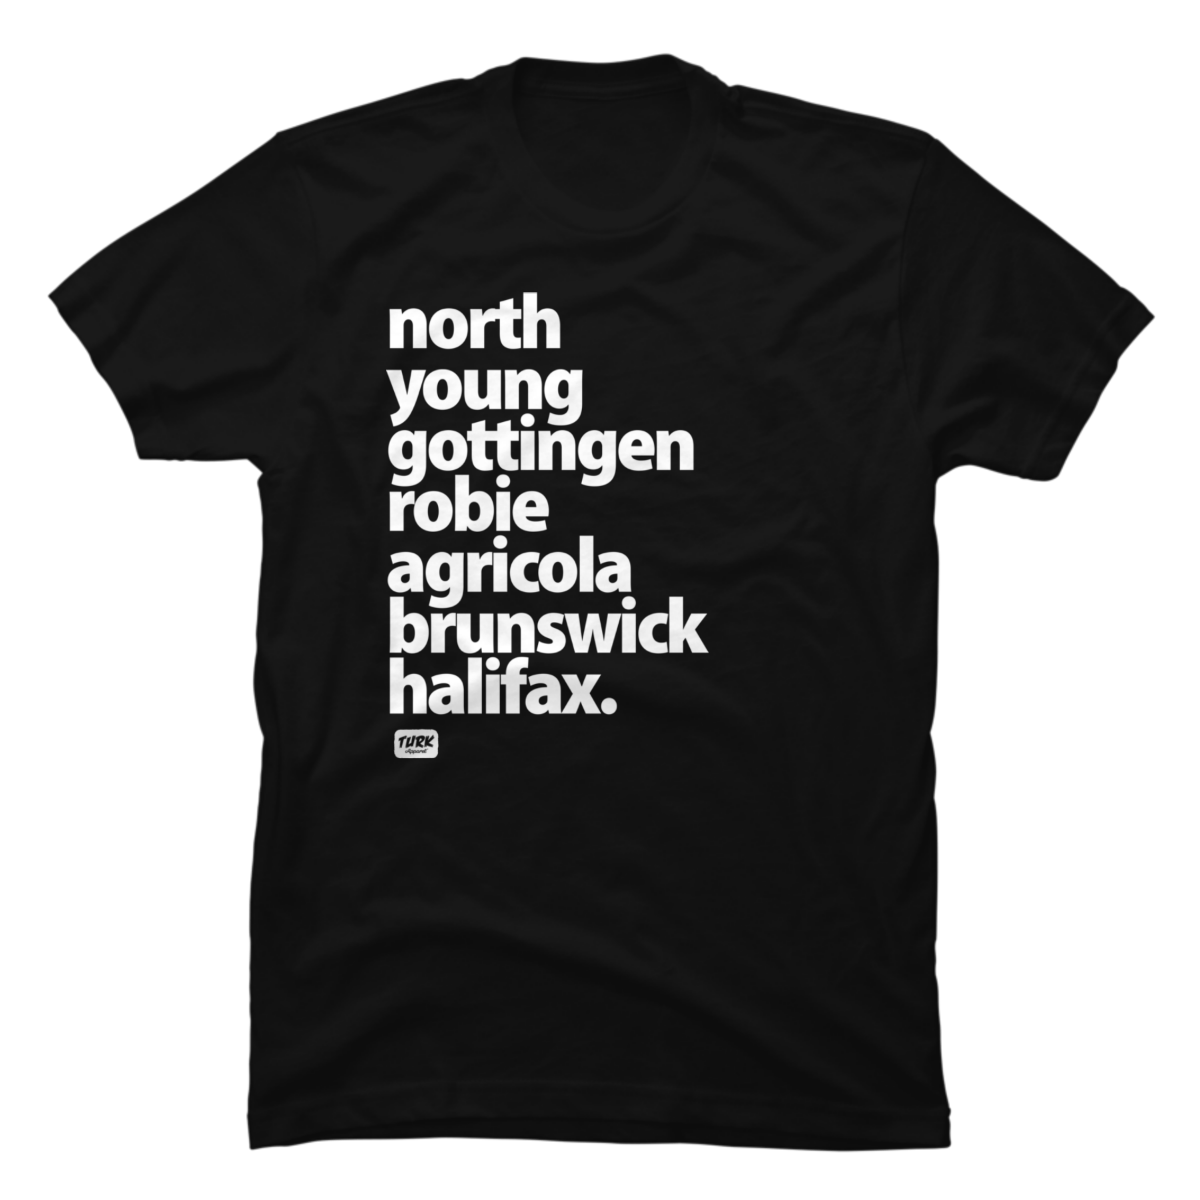 halifax shirt